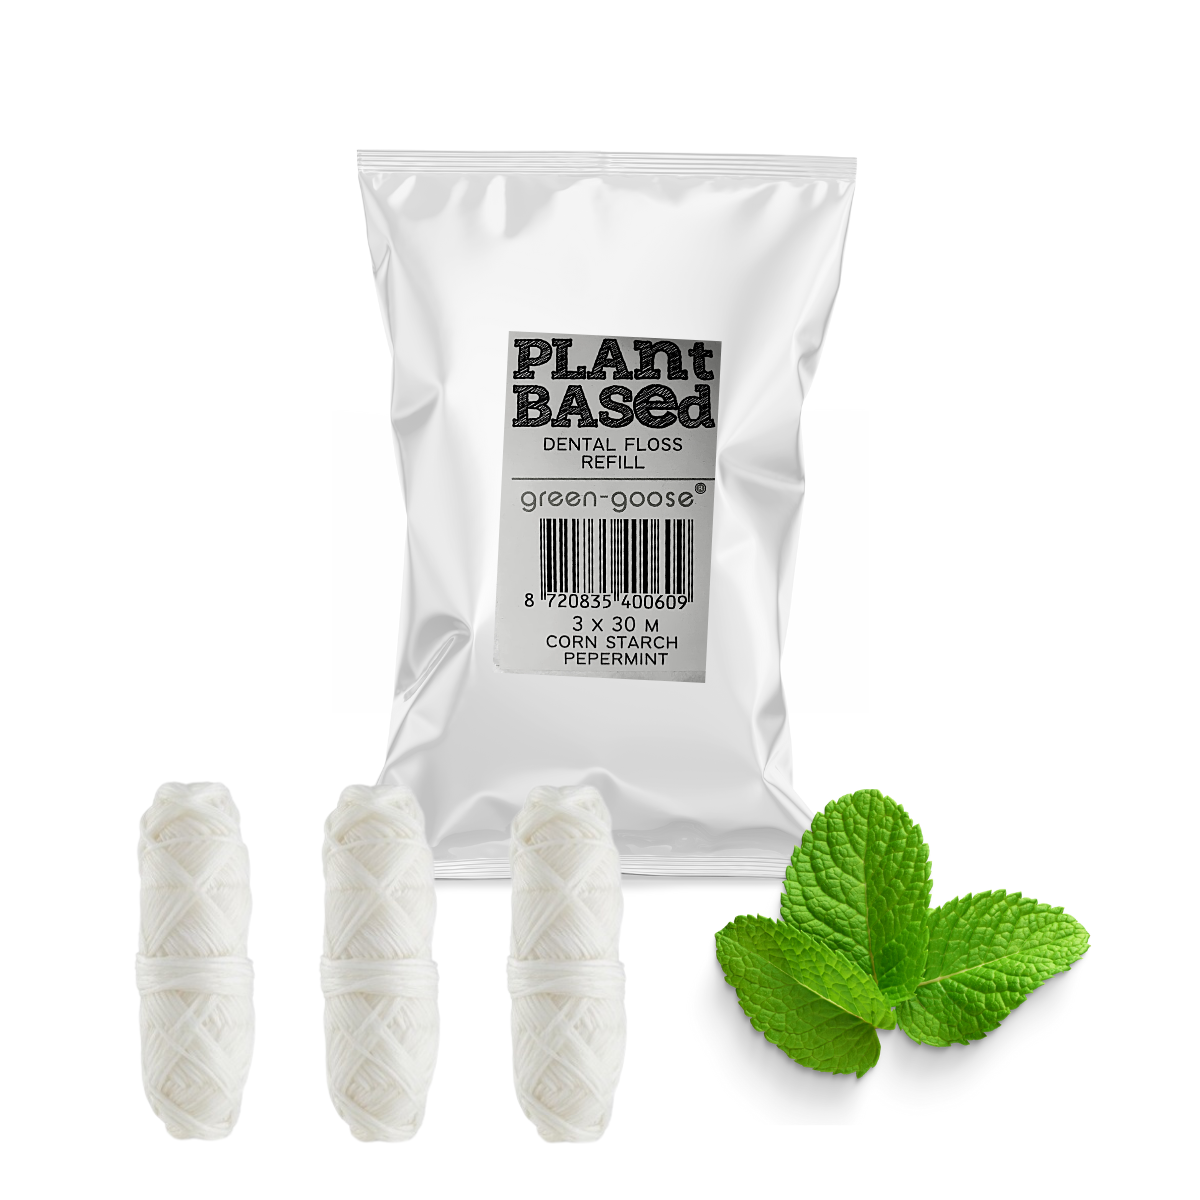 Bio-based dental floss | Mint